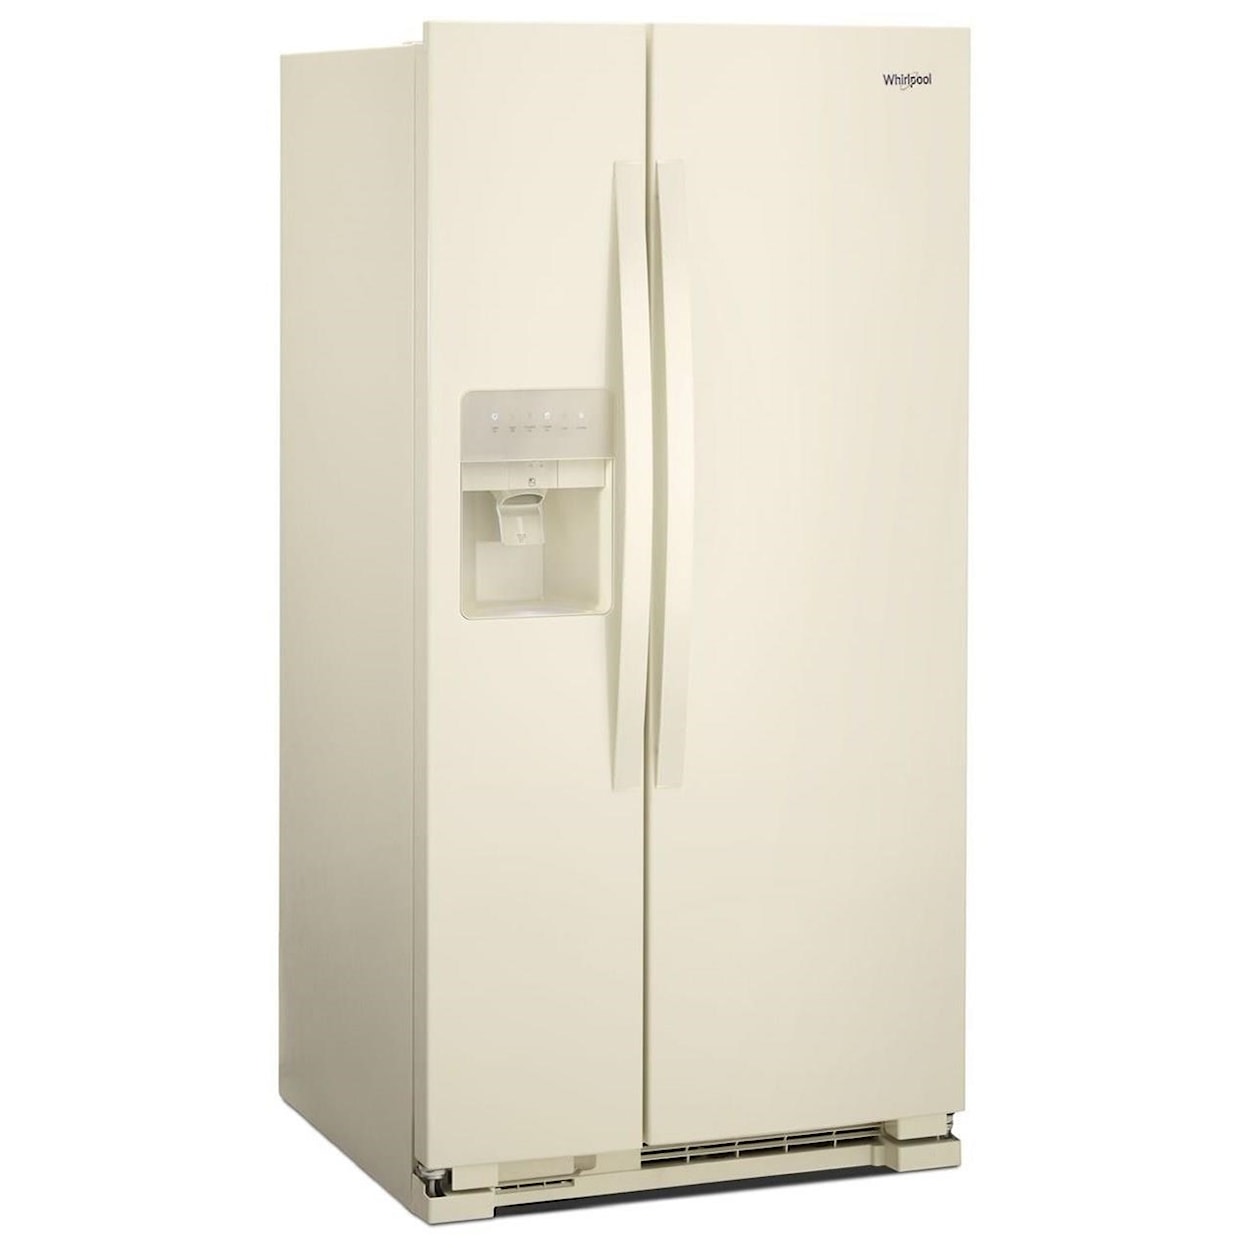 Whirlpool Side-By-Side Refrigerators 36" Wide Side-by-Side Refrigerator